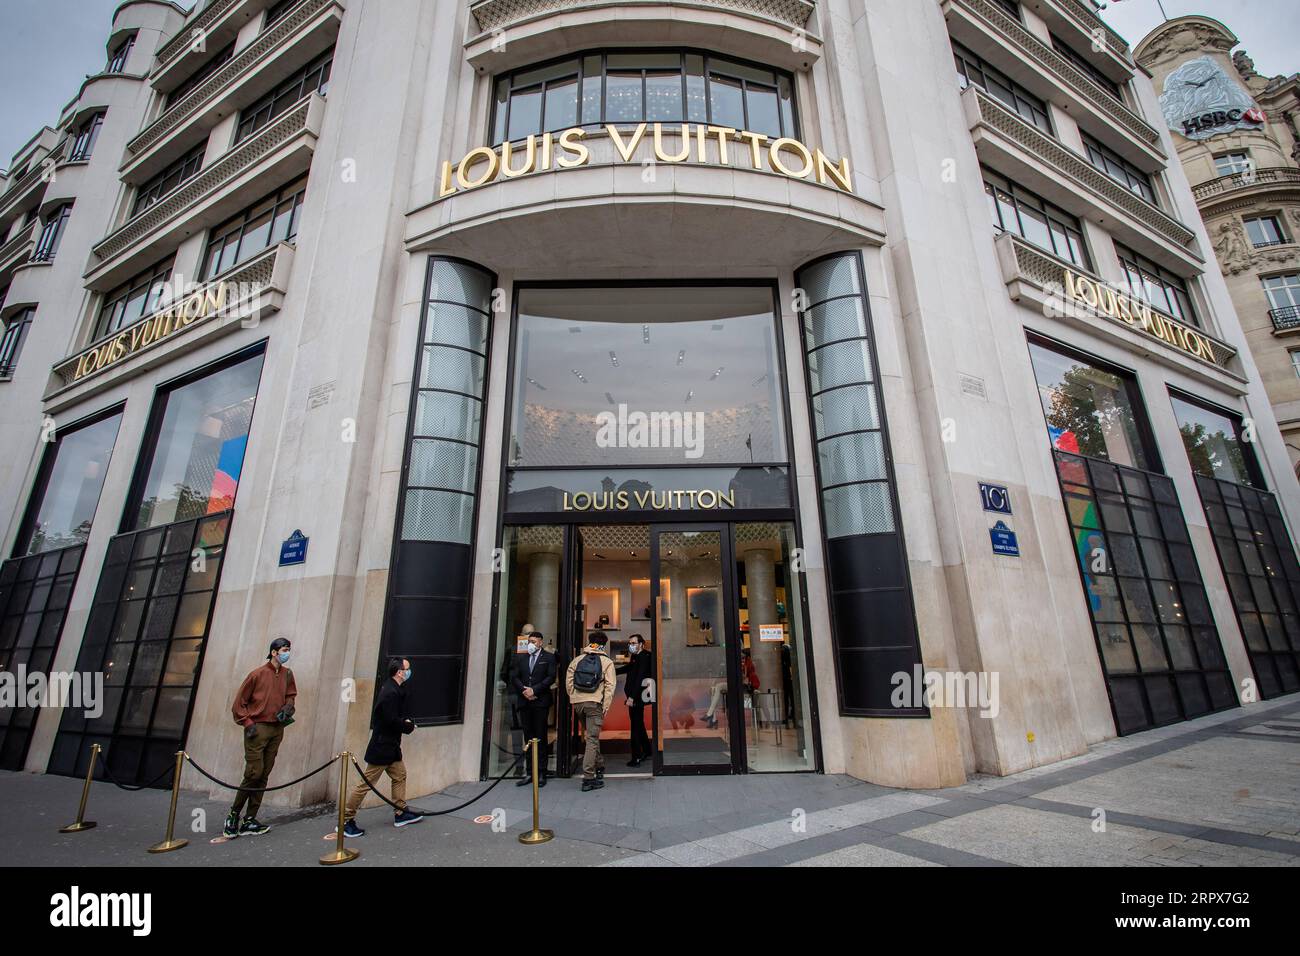 Louis Vuitton's Shanghai Flagship Sees Record-Breaking $22 Million